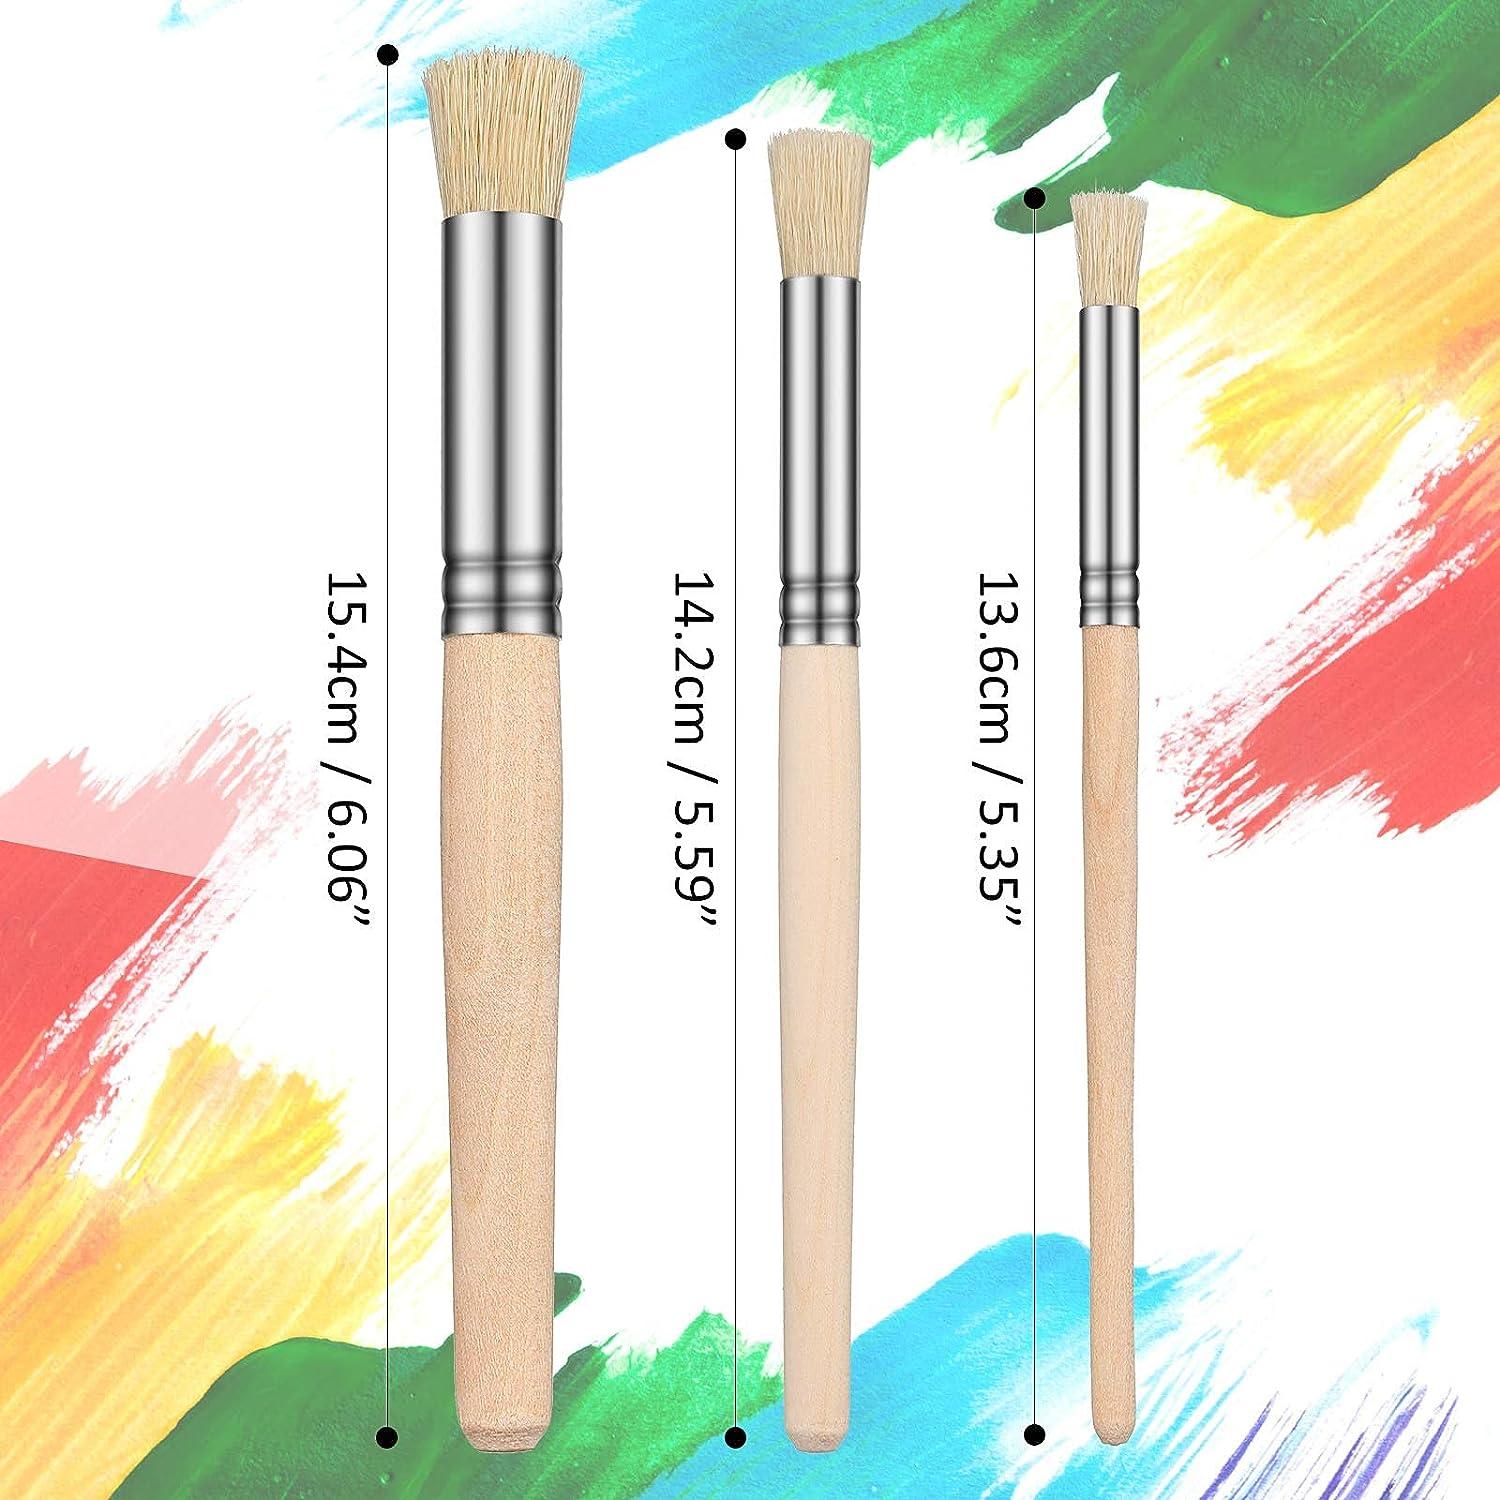 5 Piece Wood Handle Stencil Brush Set - Natural Bristle Template